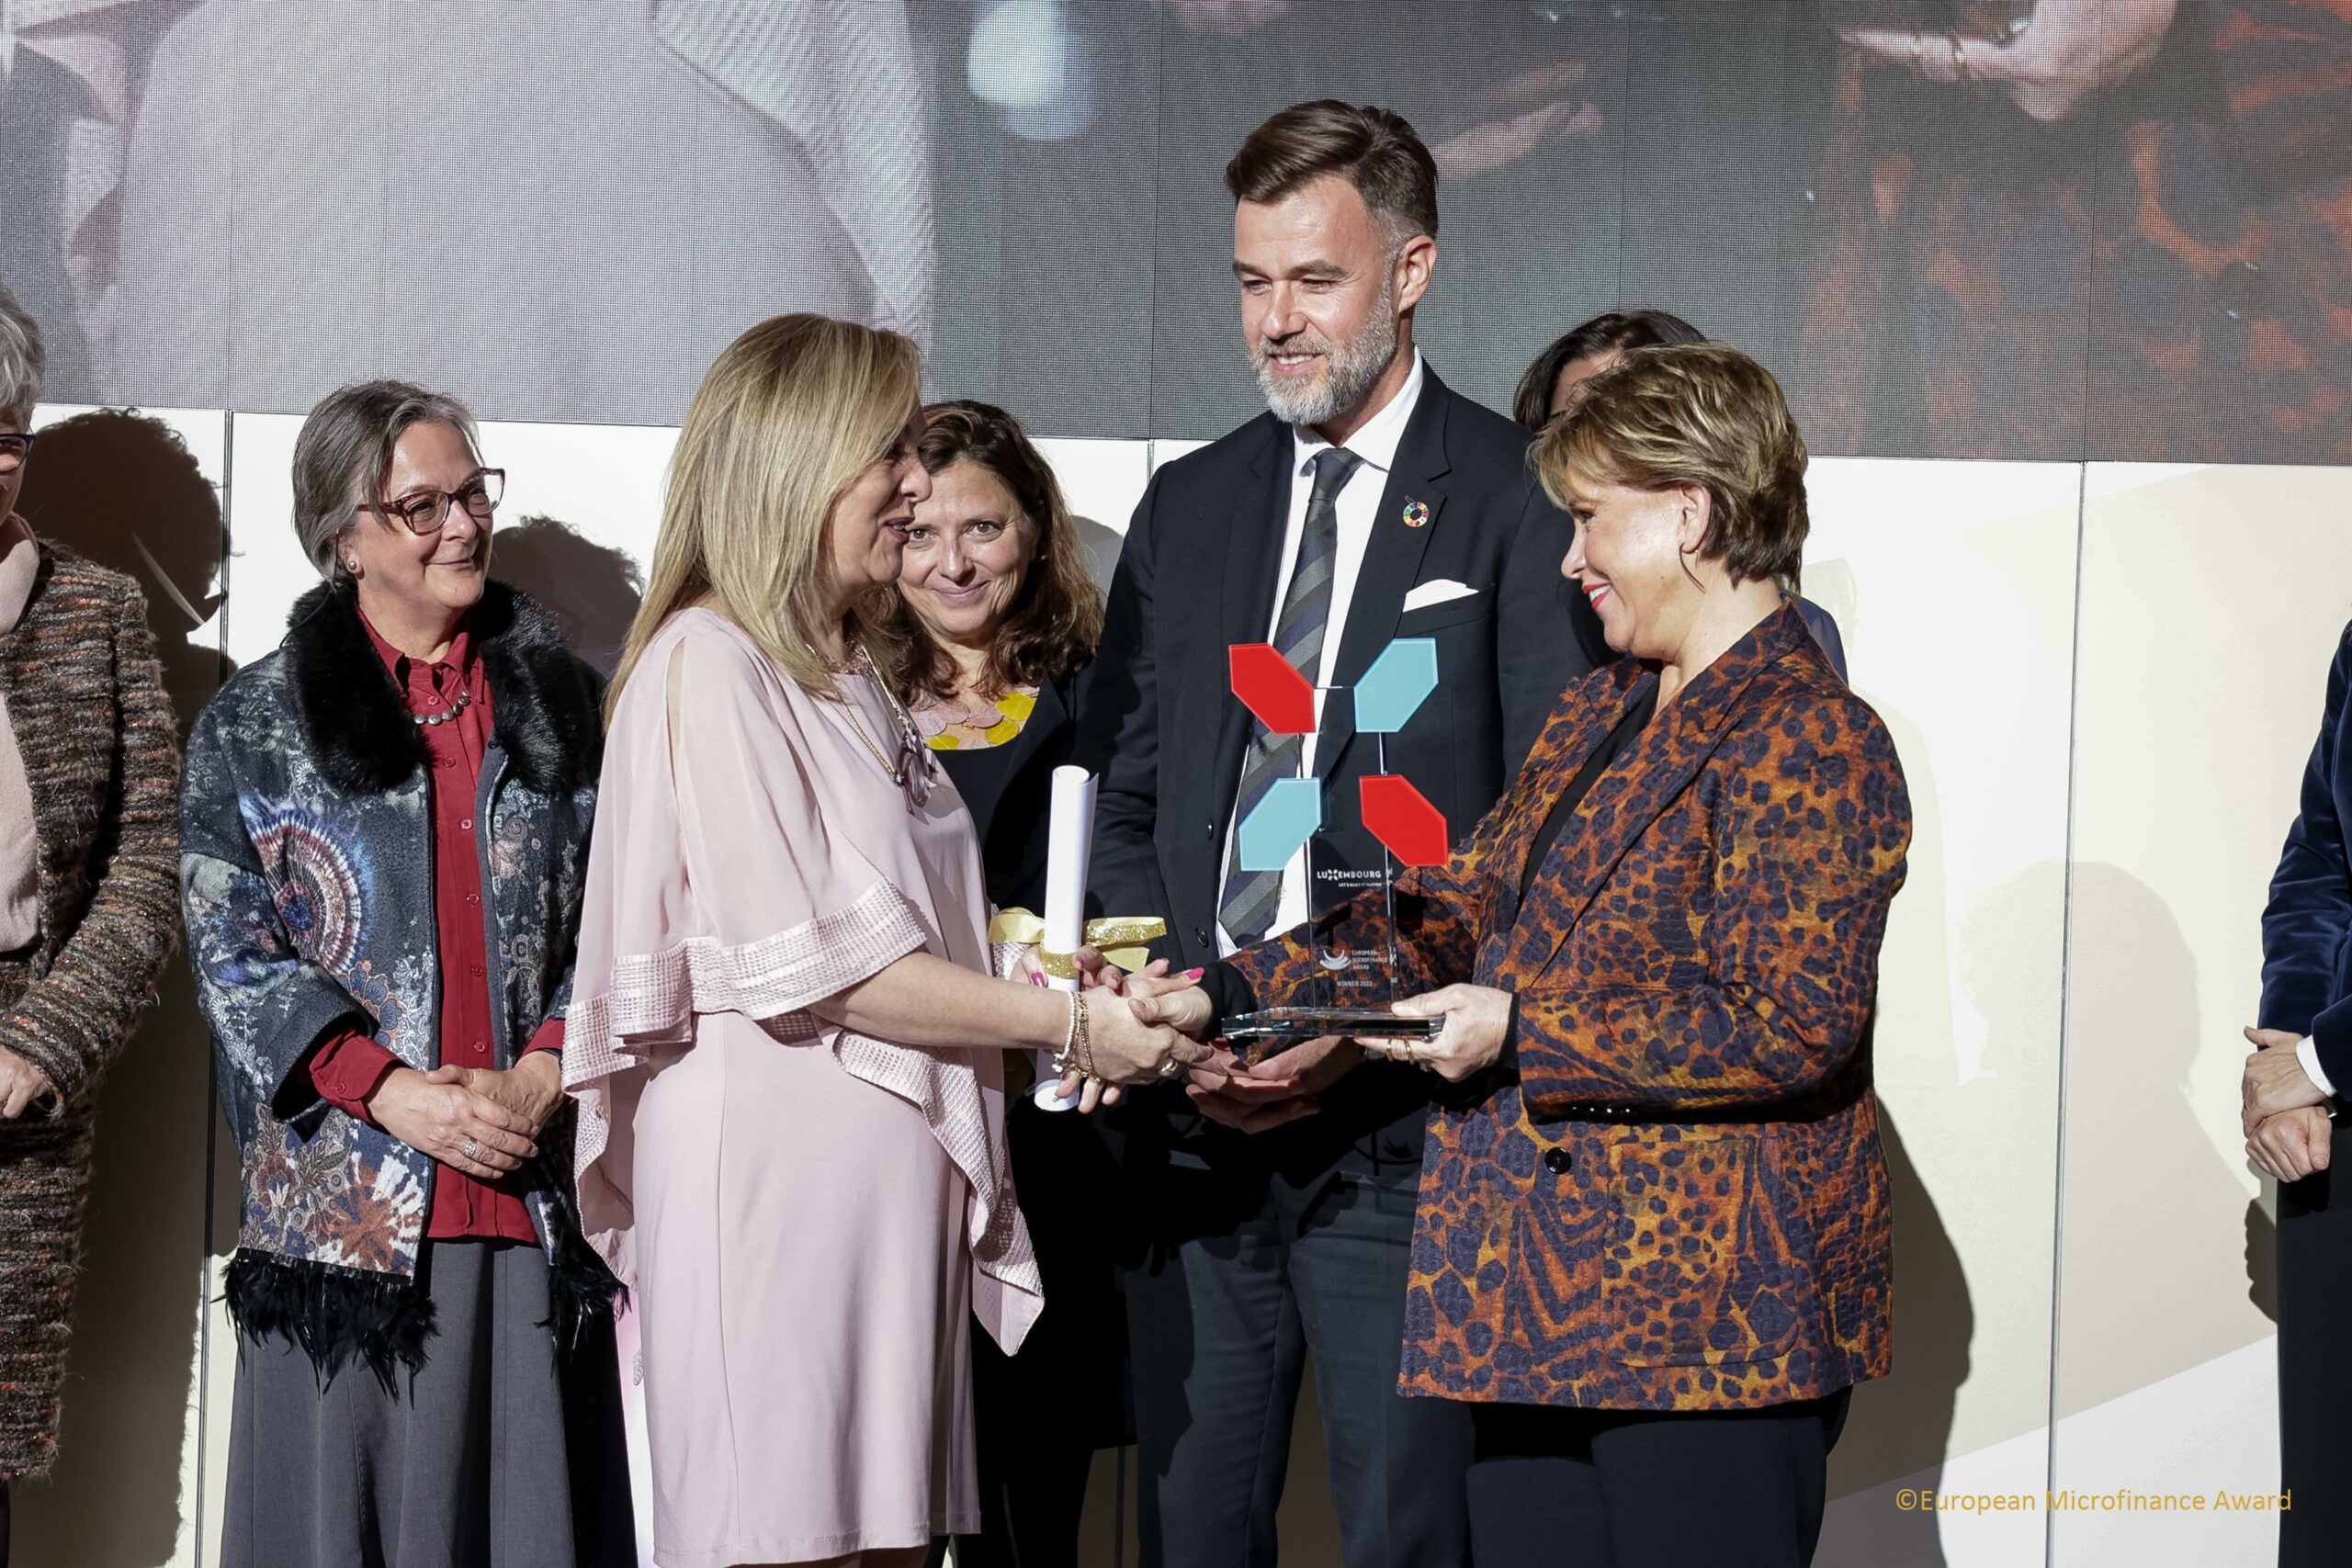 The 2022 European Microfinance Award